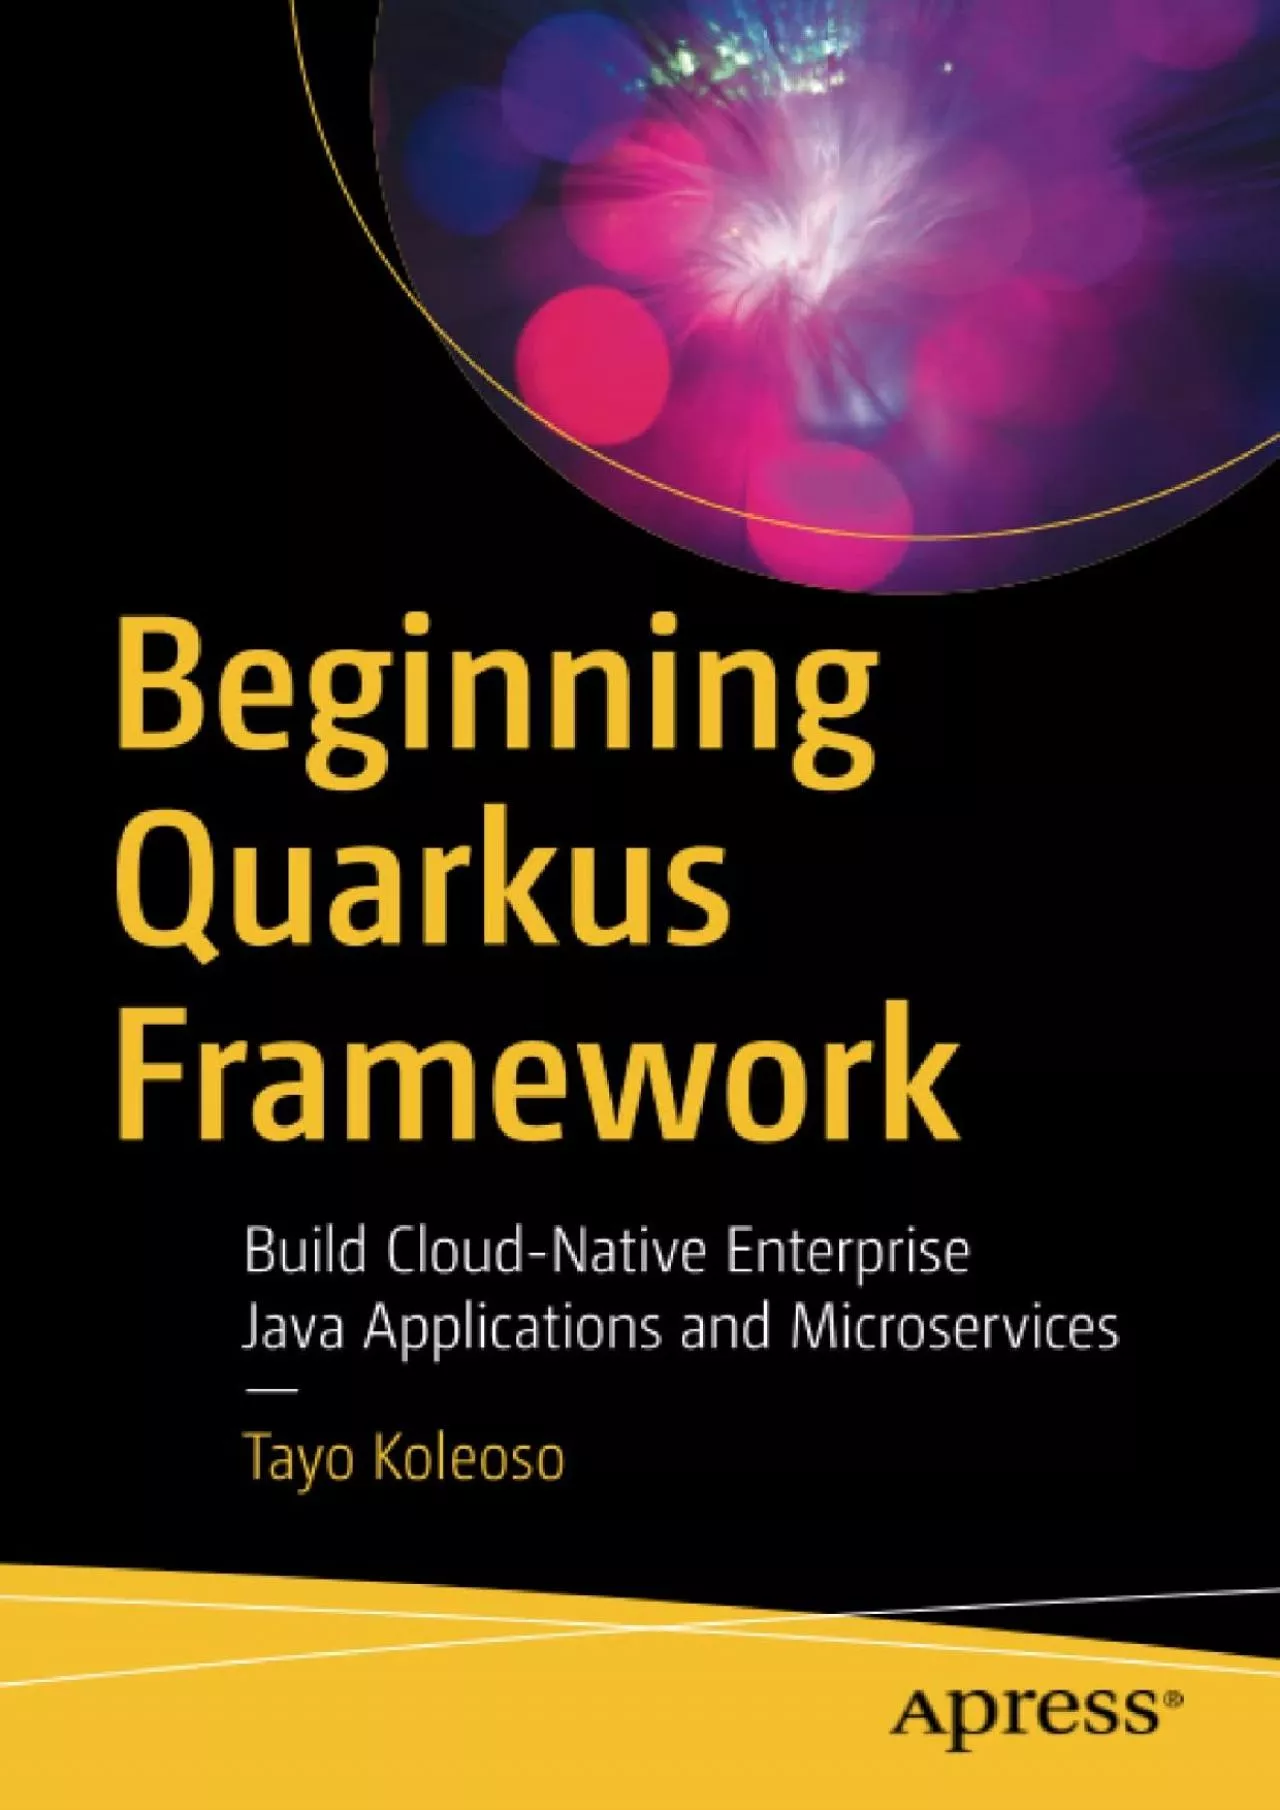 [BEST]-Beginning Quarkus Framework: Build Cloud-Native Enterprise Java Applications and